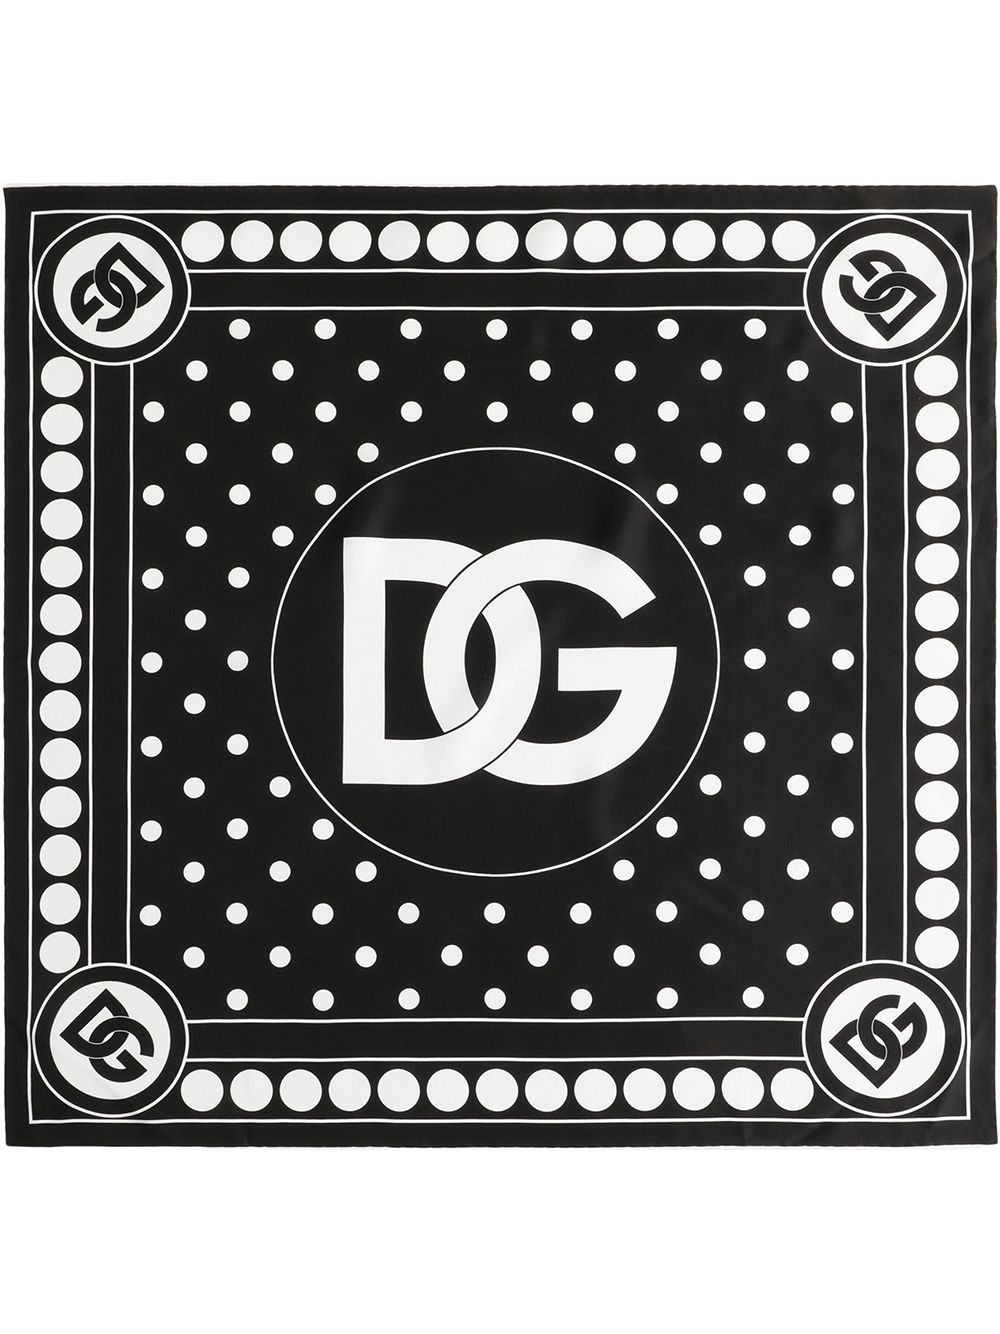 фото Dolce & gabbana платок в горох с логотипом